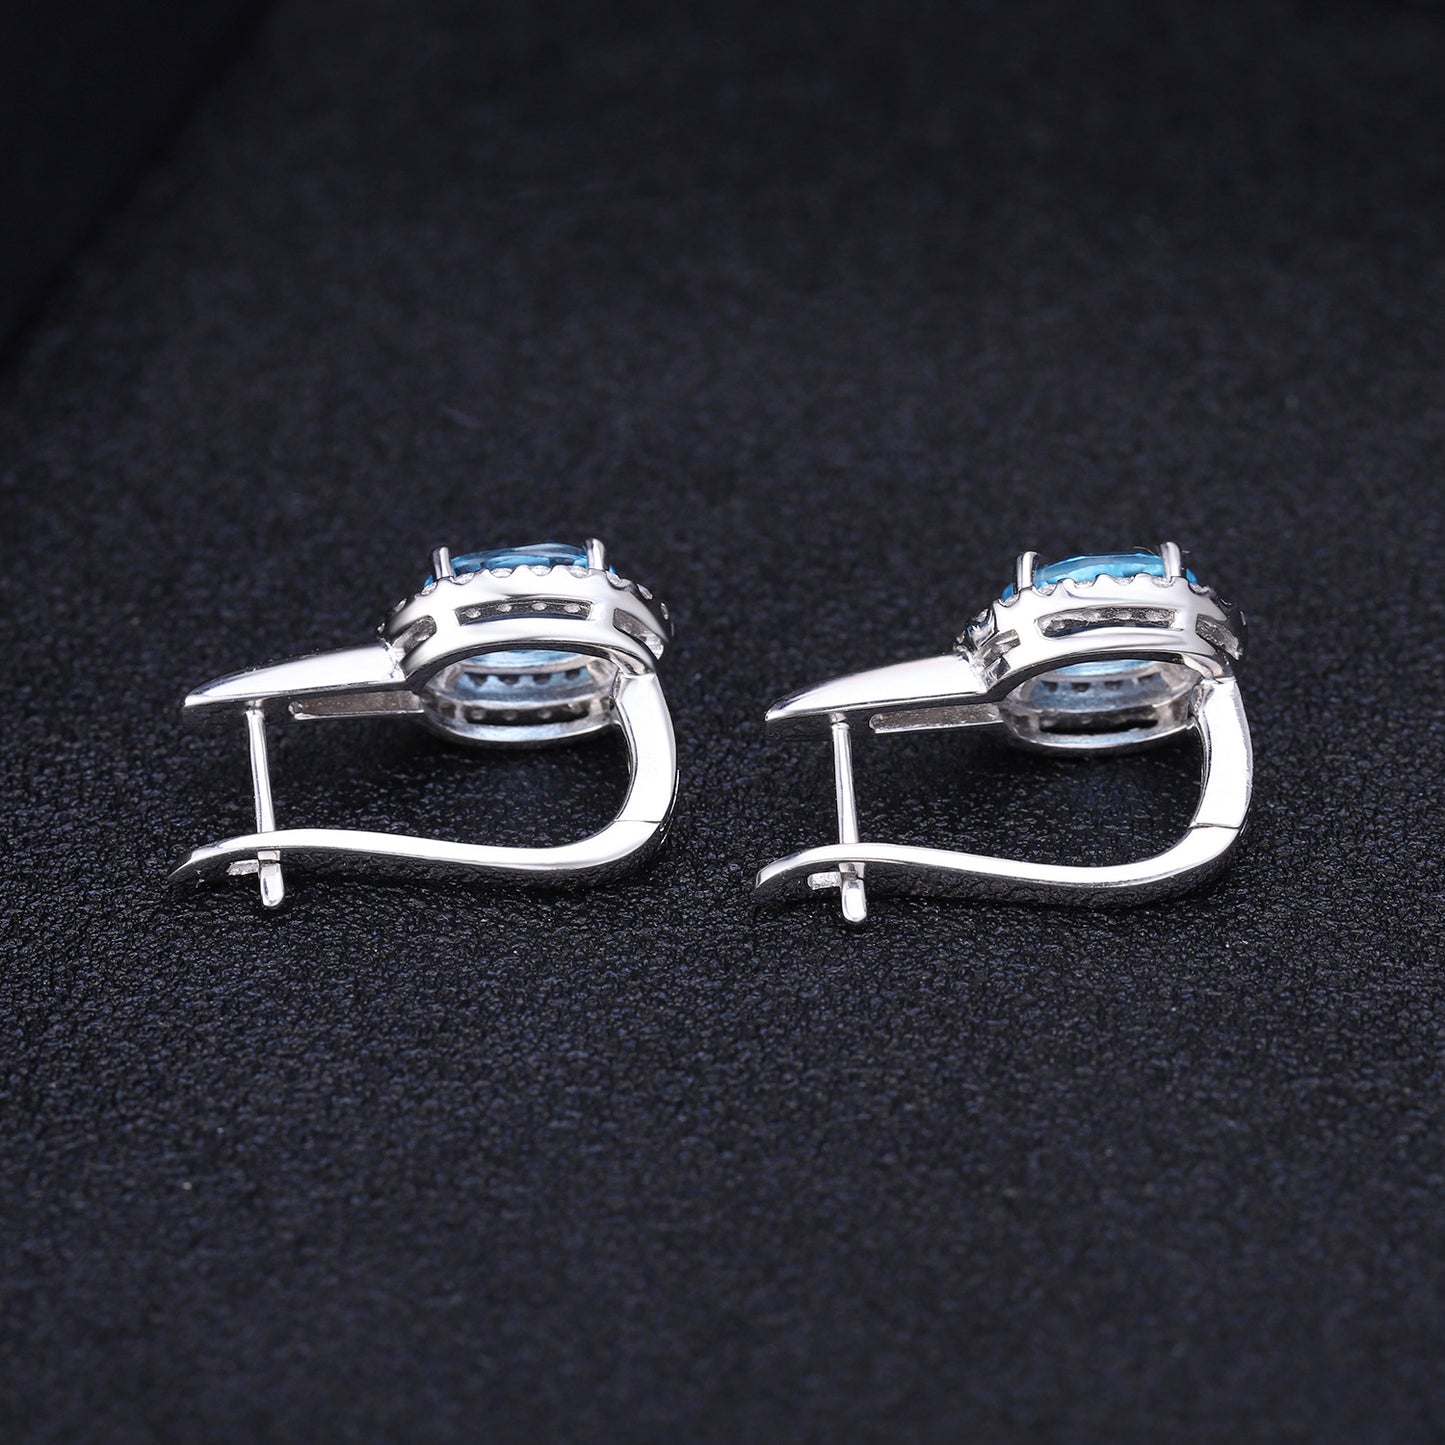 European Natural Topaz Soleste Halo Oval Shape Silver Studs Earrings for Women